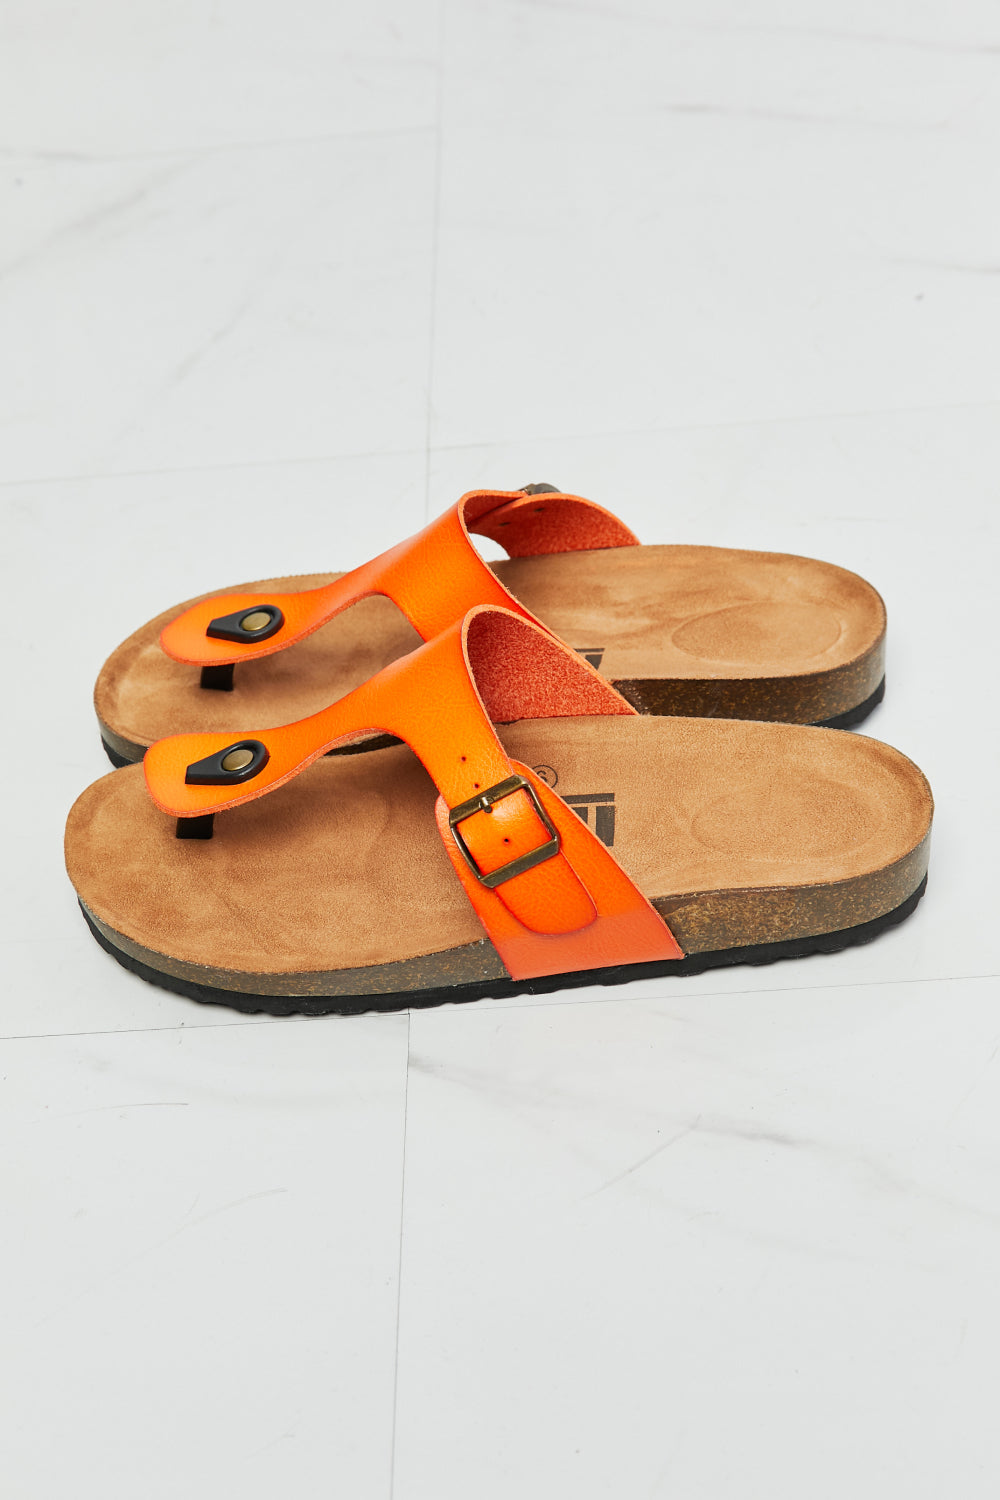 MMShoes Drift Away T-Strap Flip-Flop in Orange - Tigbul's Fashion